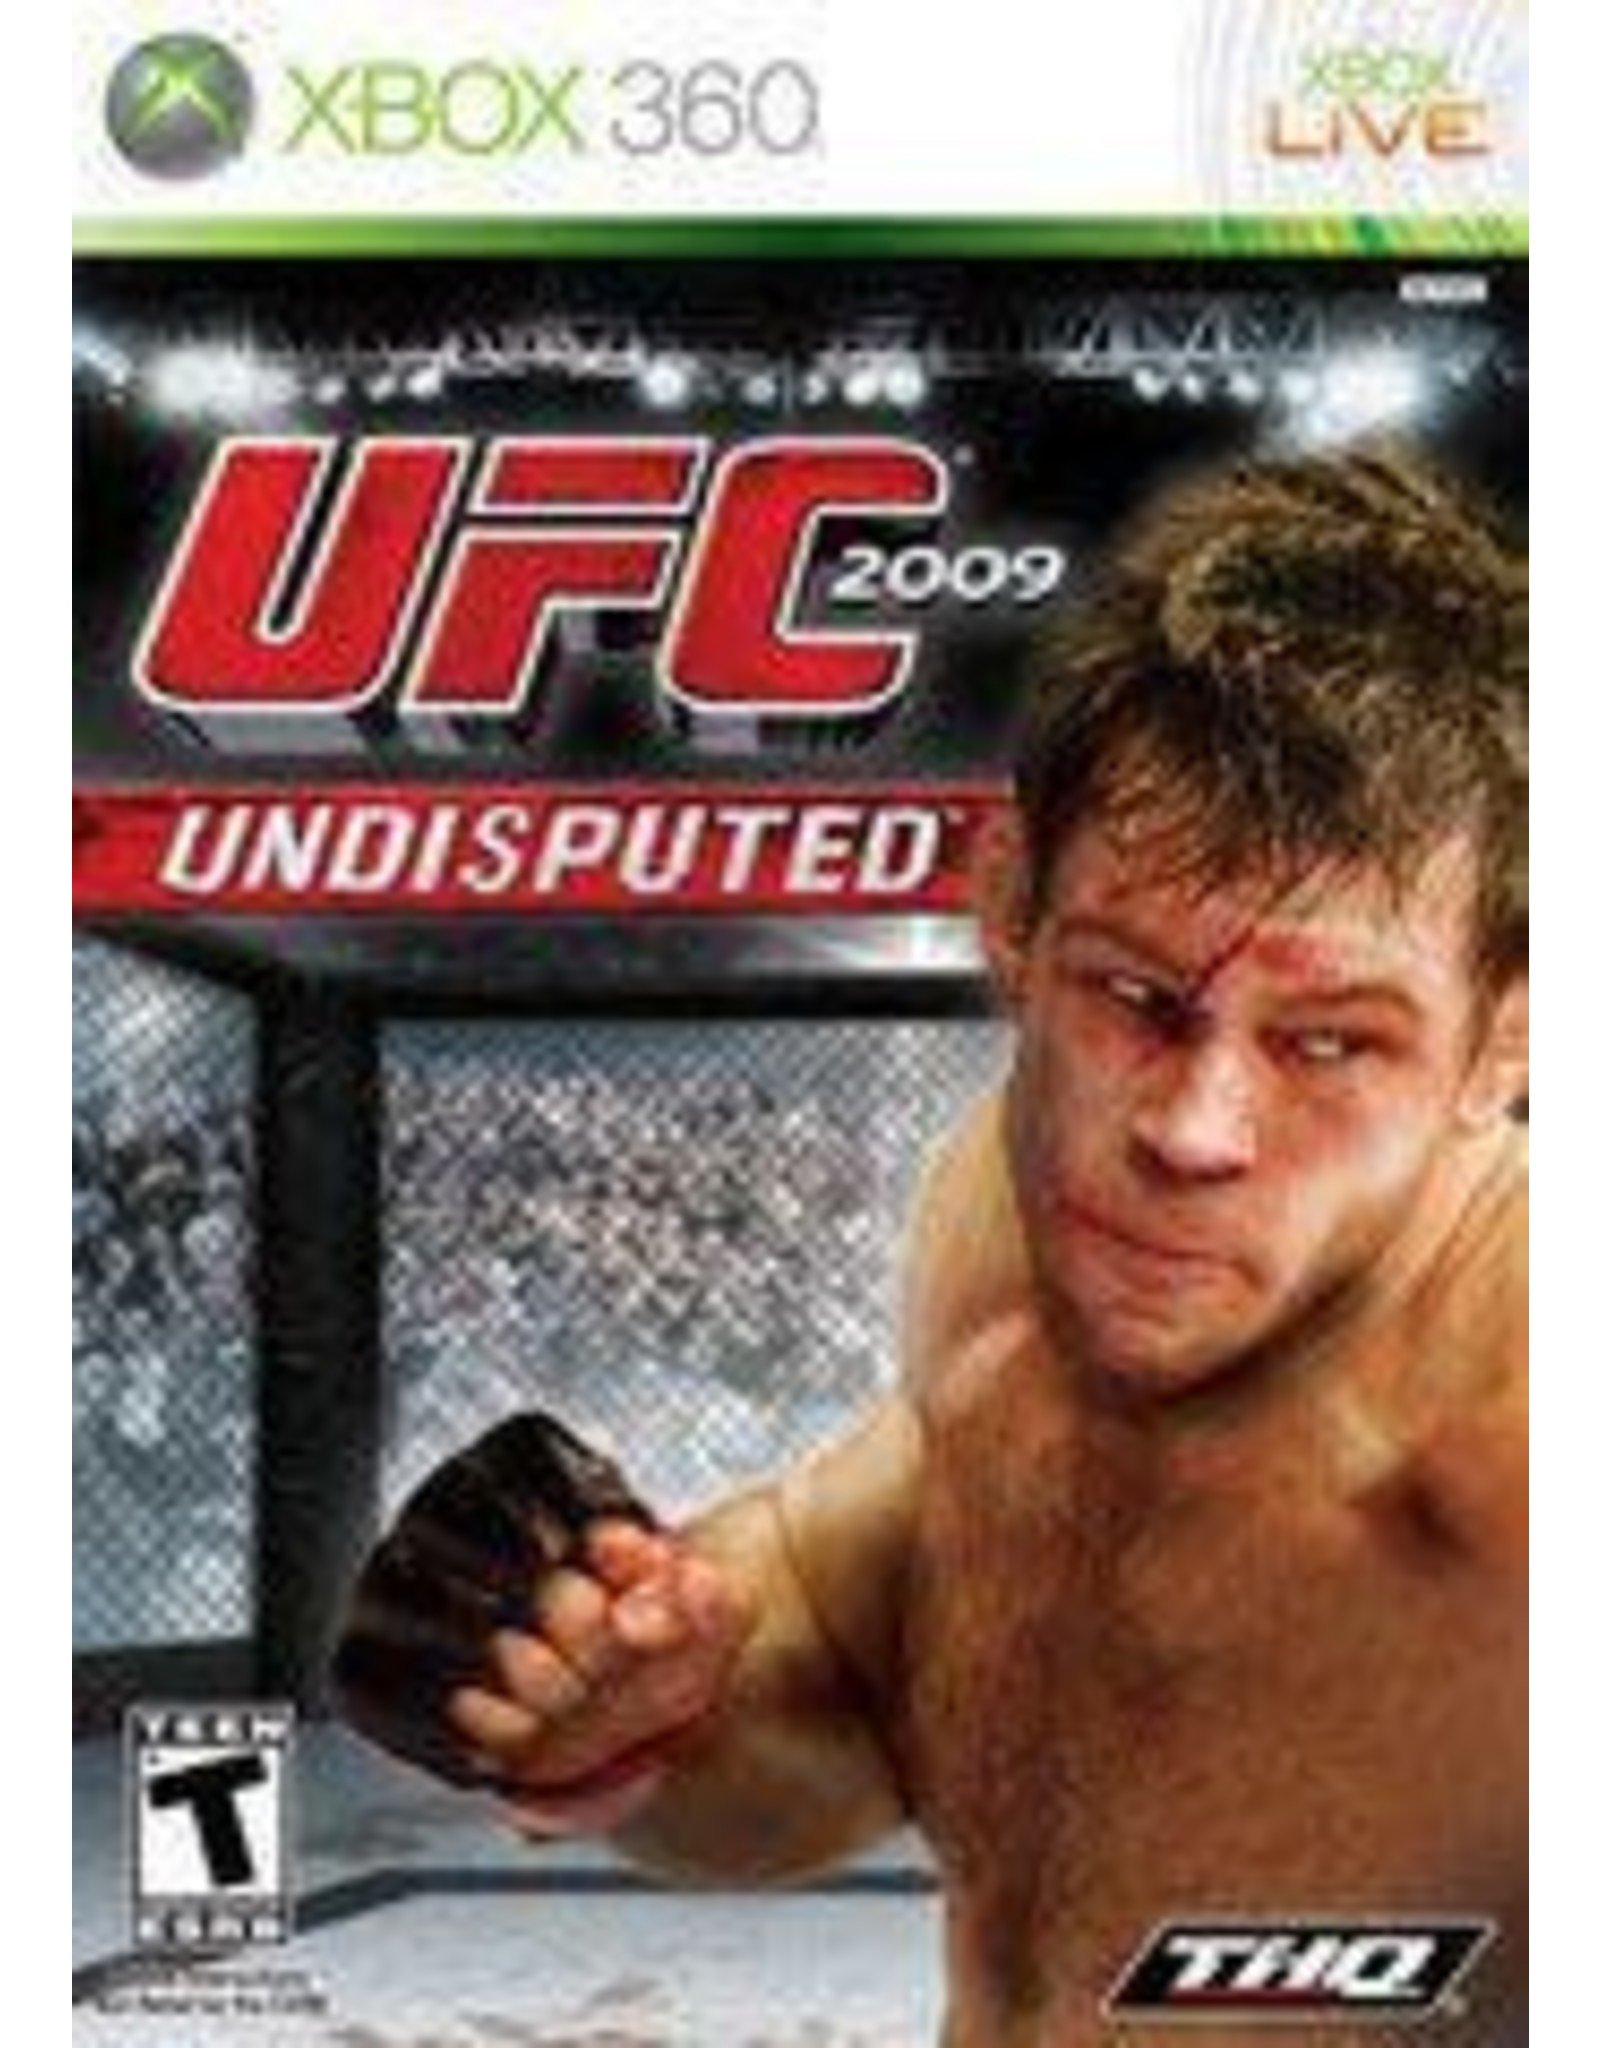 Xbox 360 UFC 2009 Undisputed (Used)